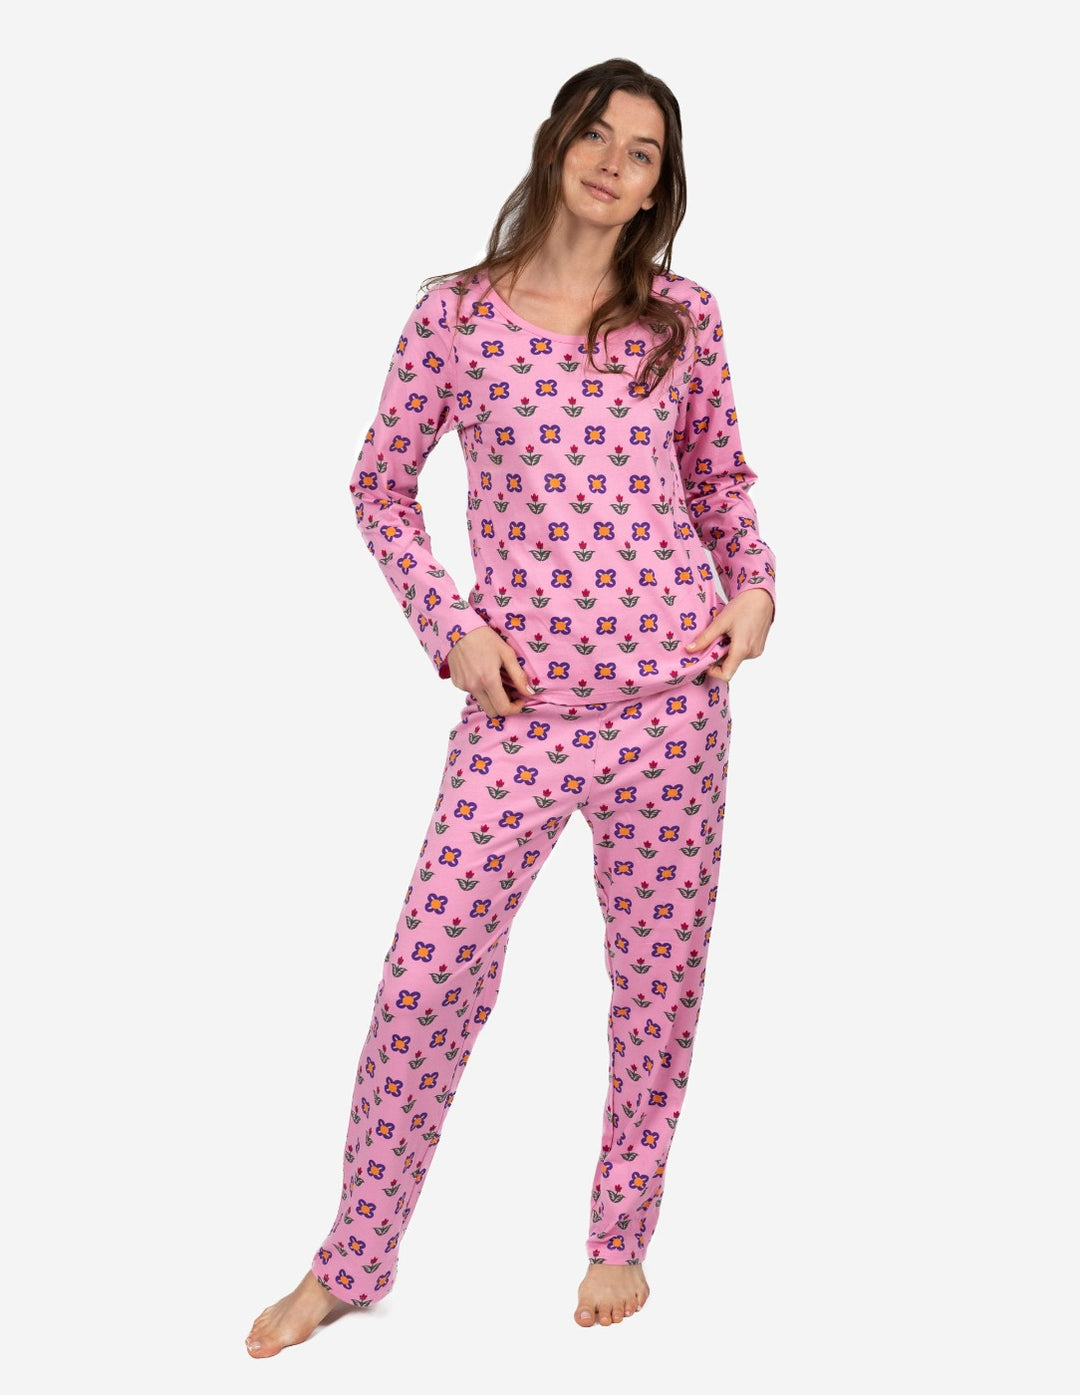 Classic Polka-Dot Women's Pajamas - Navy in Women's Cotton Pajamas